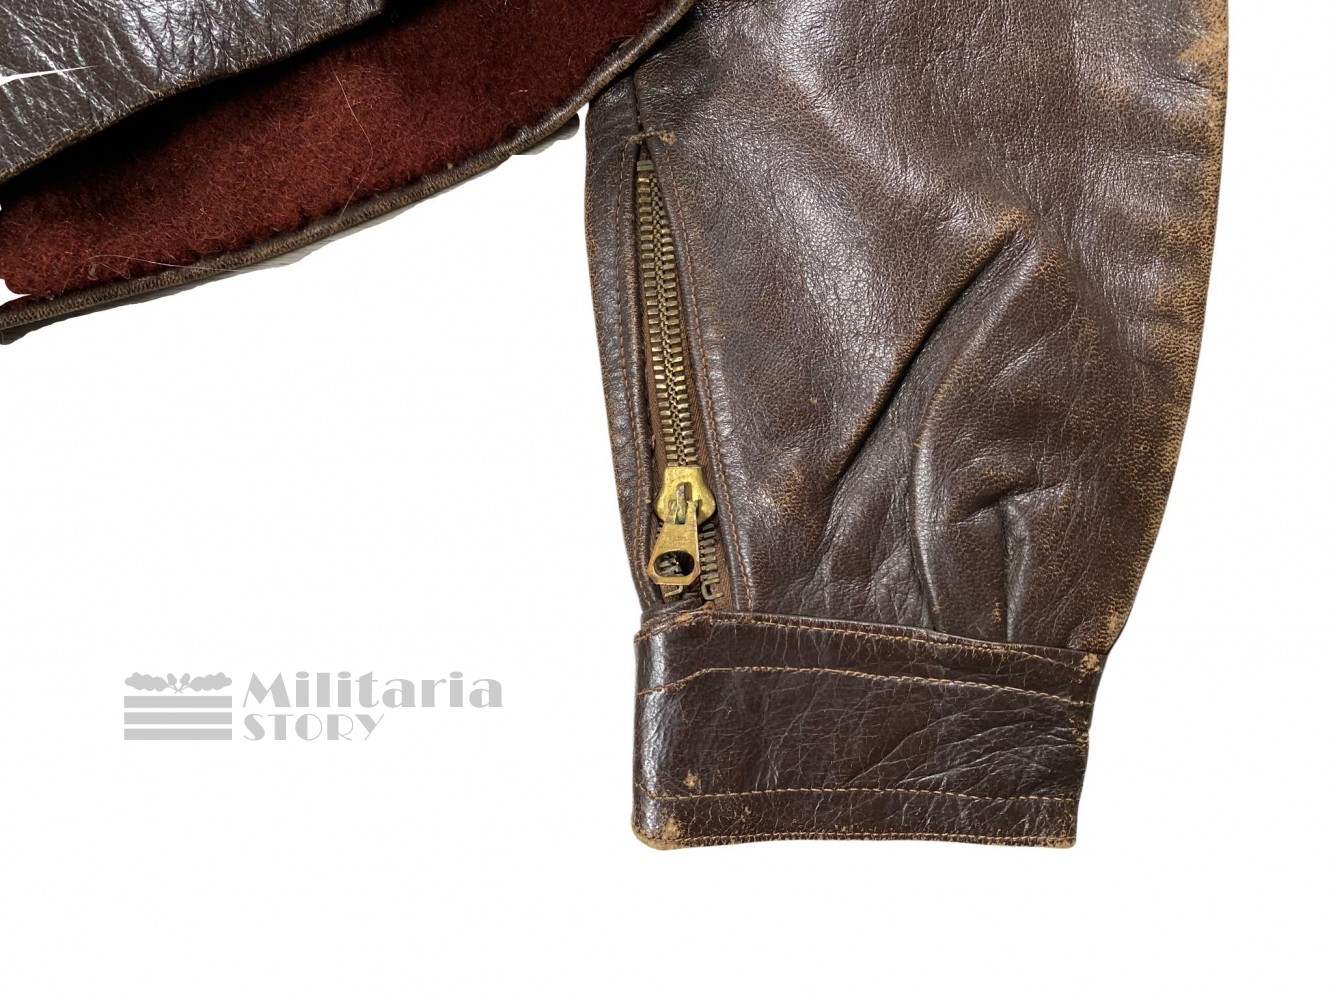 Luftwaffe Signal Leather jacket - Luftwaffe Signal Leather jacket: WW2 German Uniforms